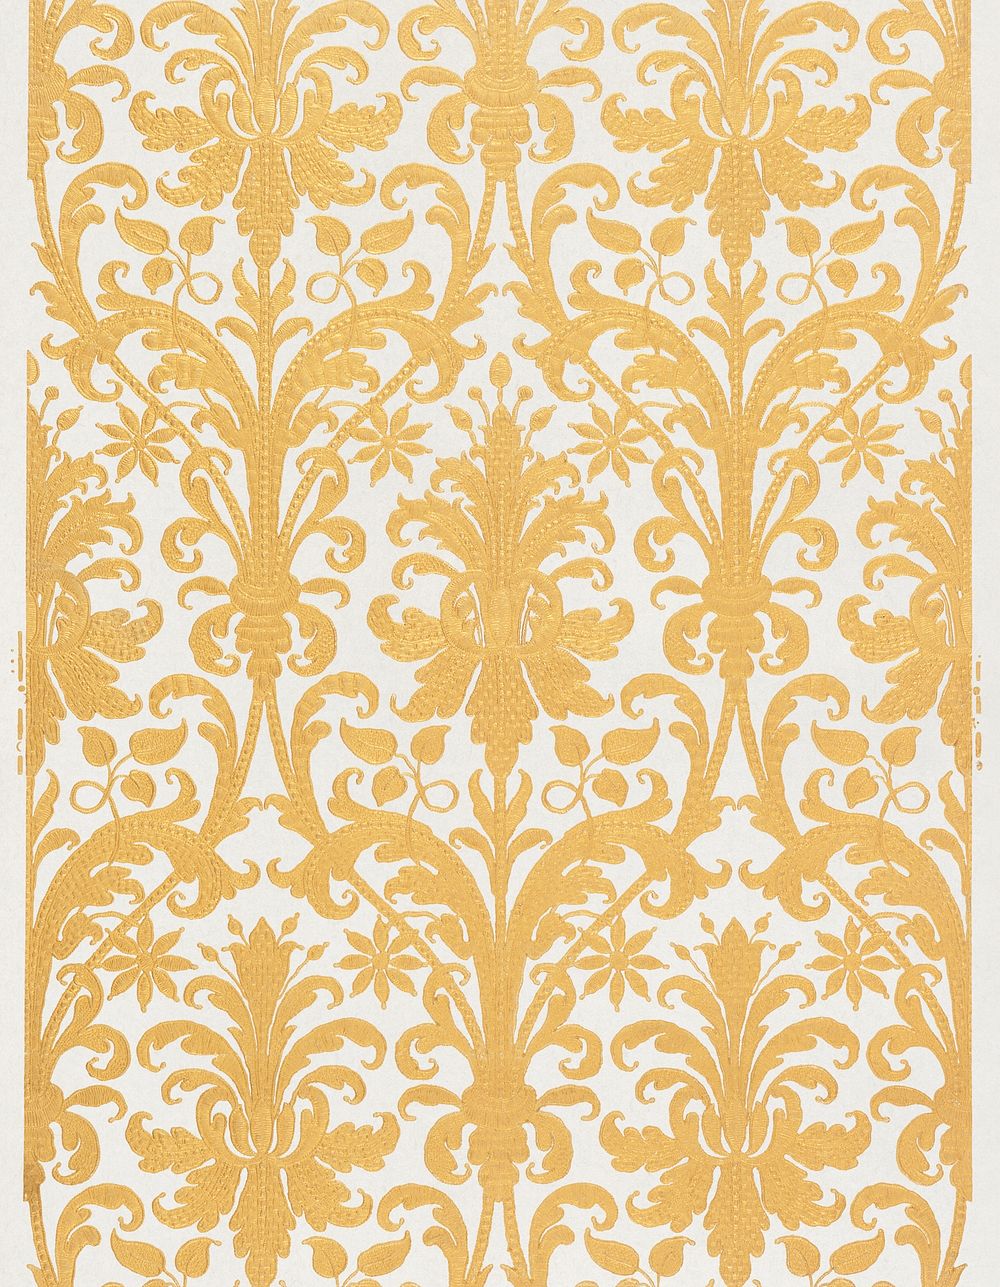 Sidewall, golden ornate pattern. Original public domain image from Smithsonian. Digitally enhanced by rawpixel.